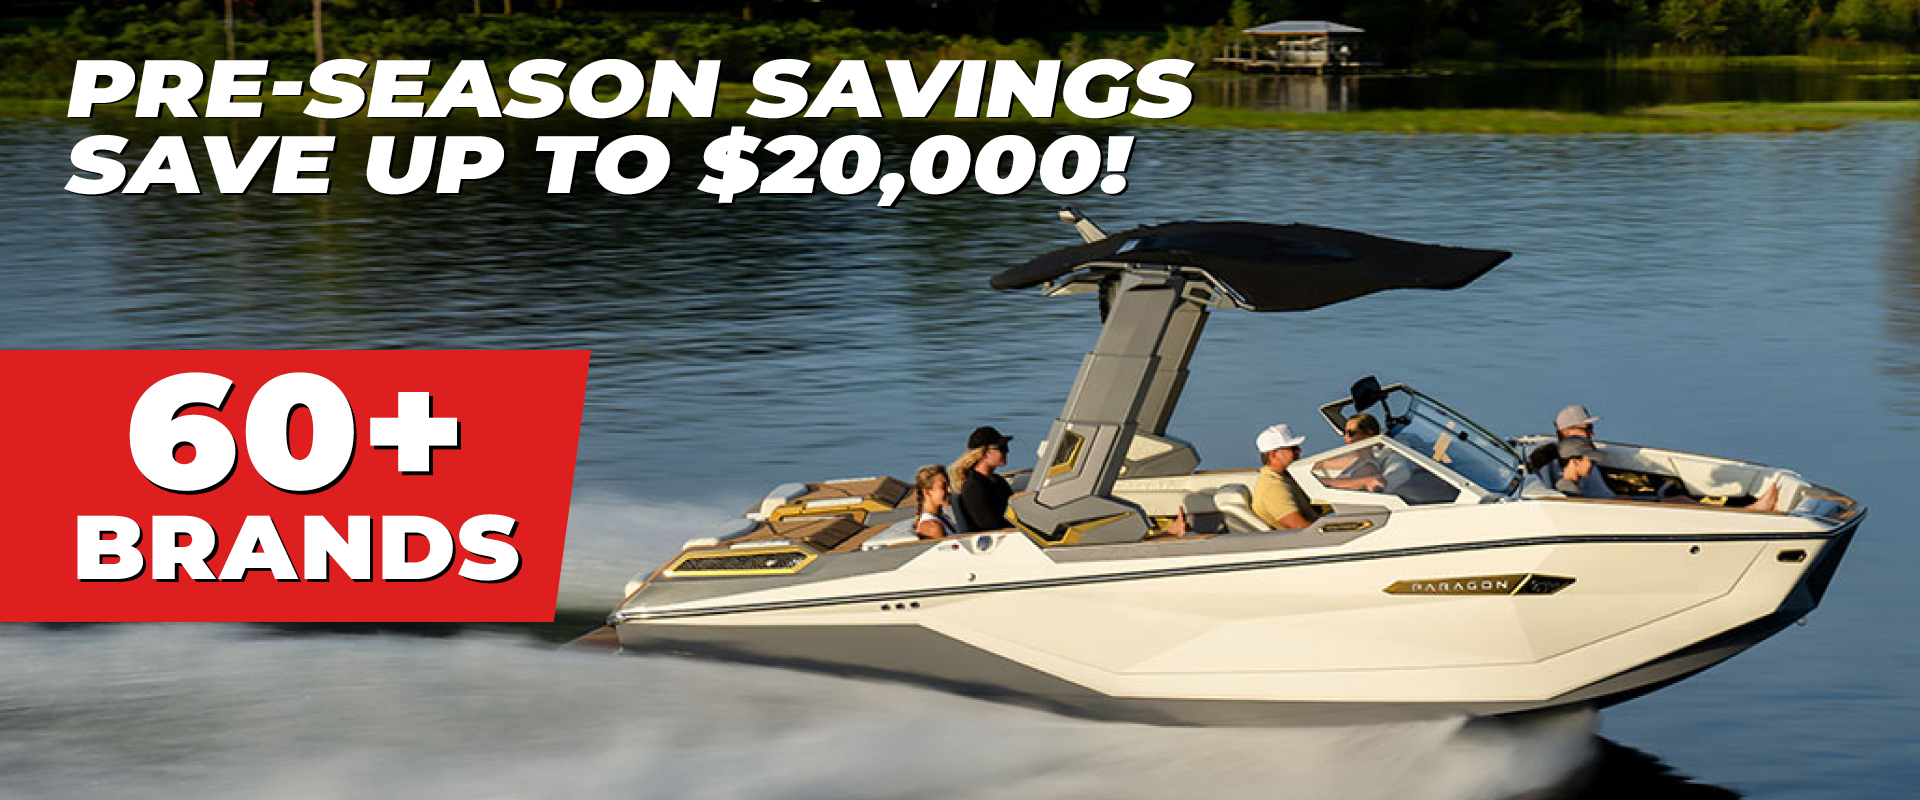 Preseason Savings up to $20,000 at the Illinois Boat Show